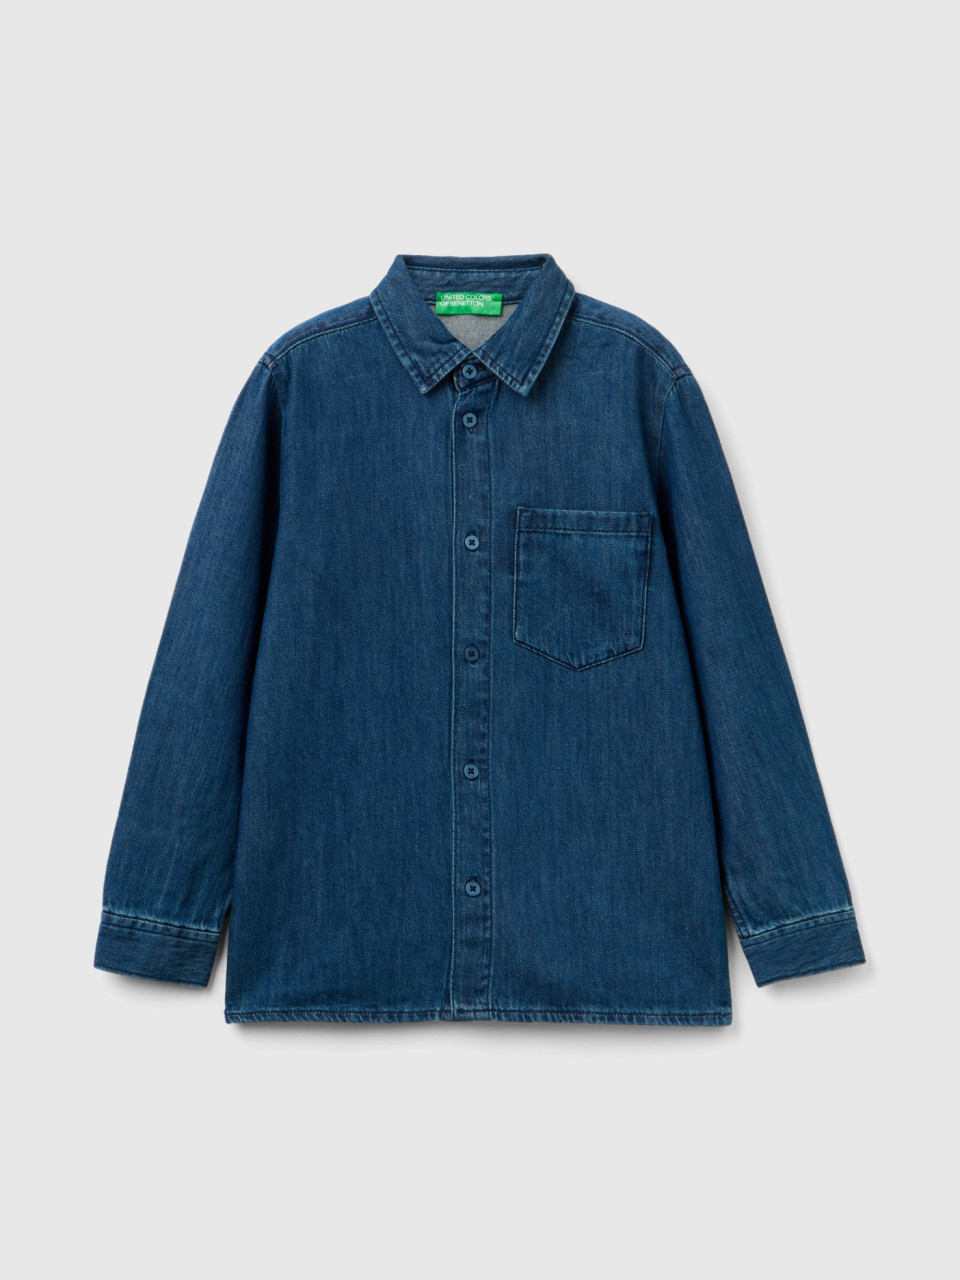 Benetton, Jean Shirt With Pocket, Blue, Kids